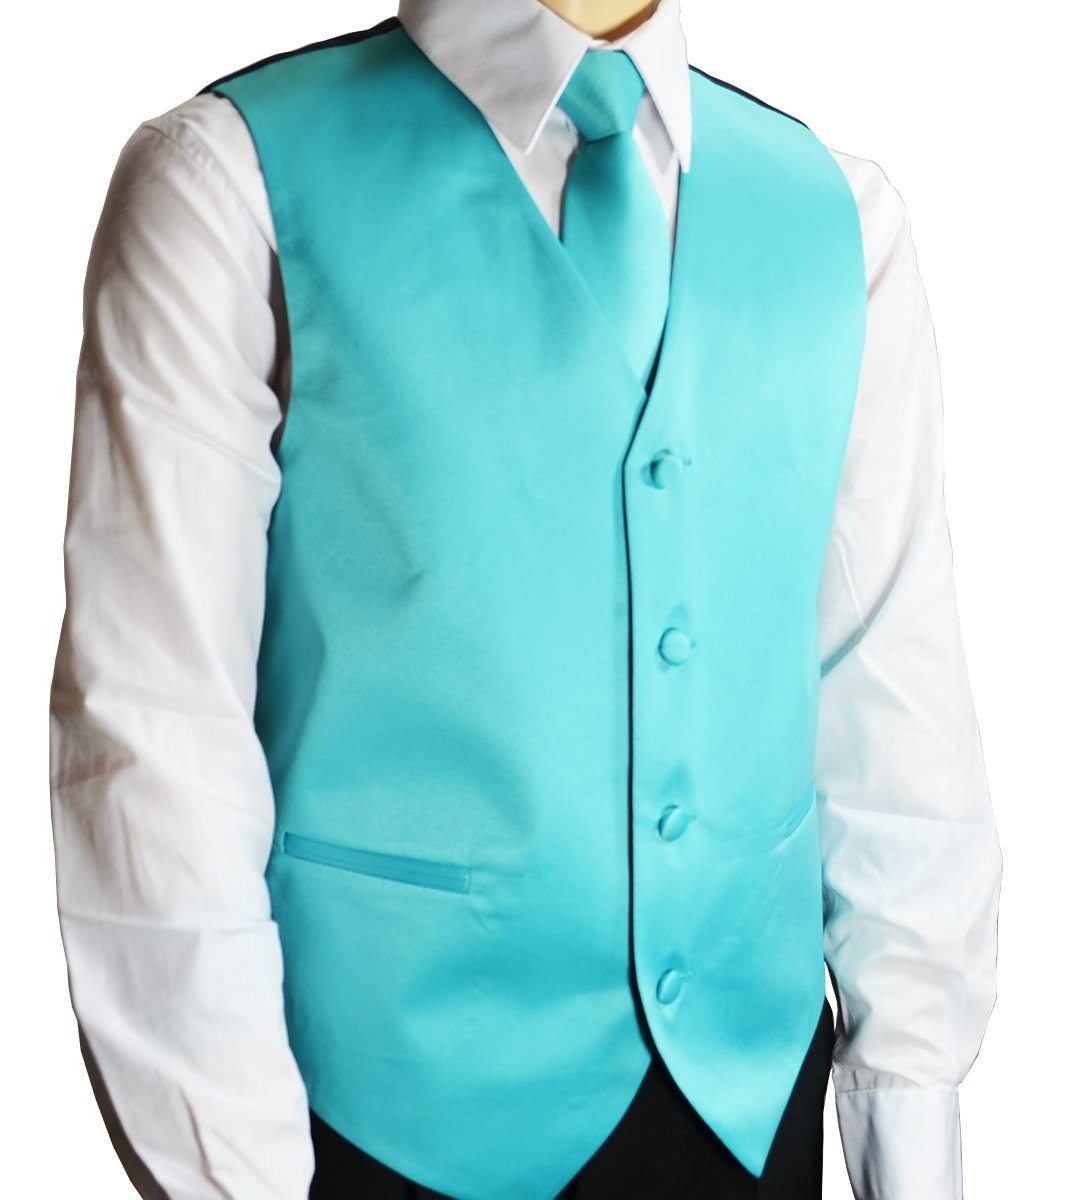 Light Blue Necktie in Kids Size